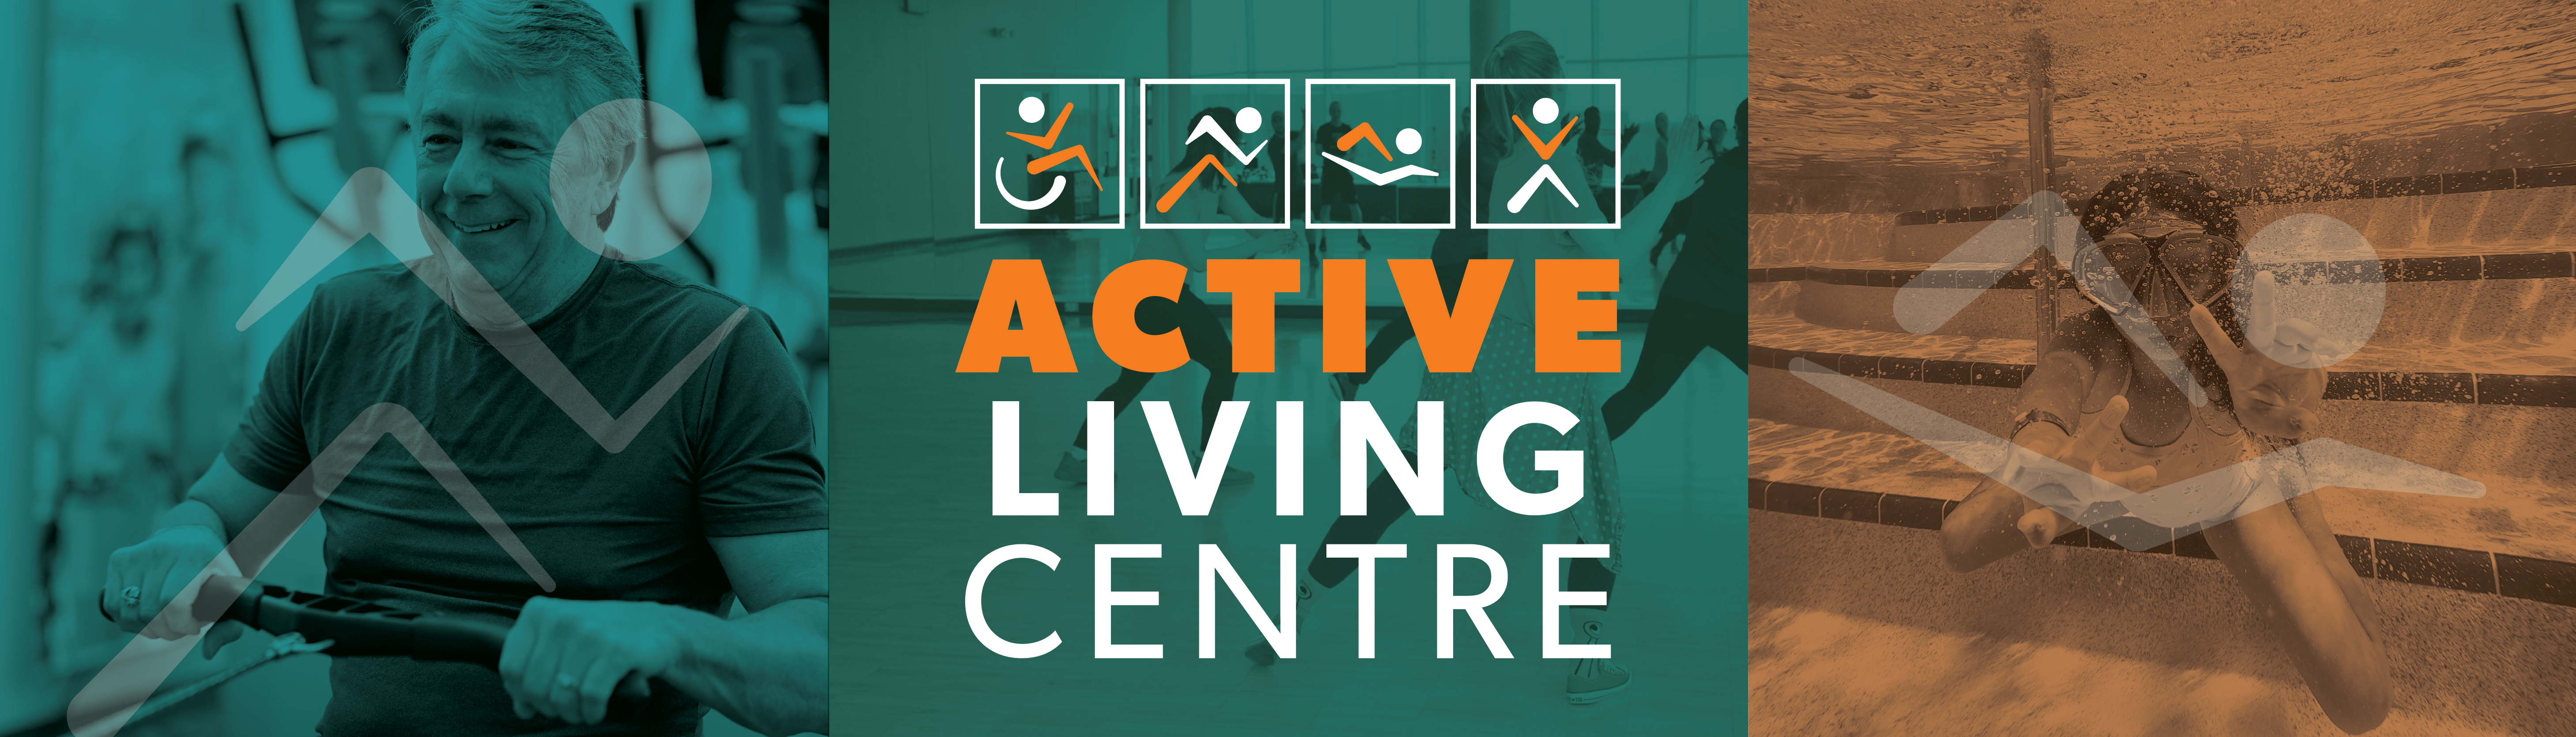 active living centre